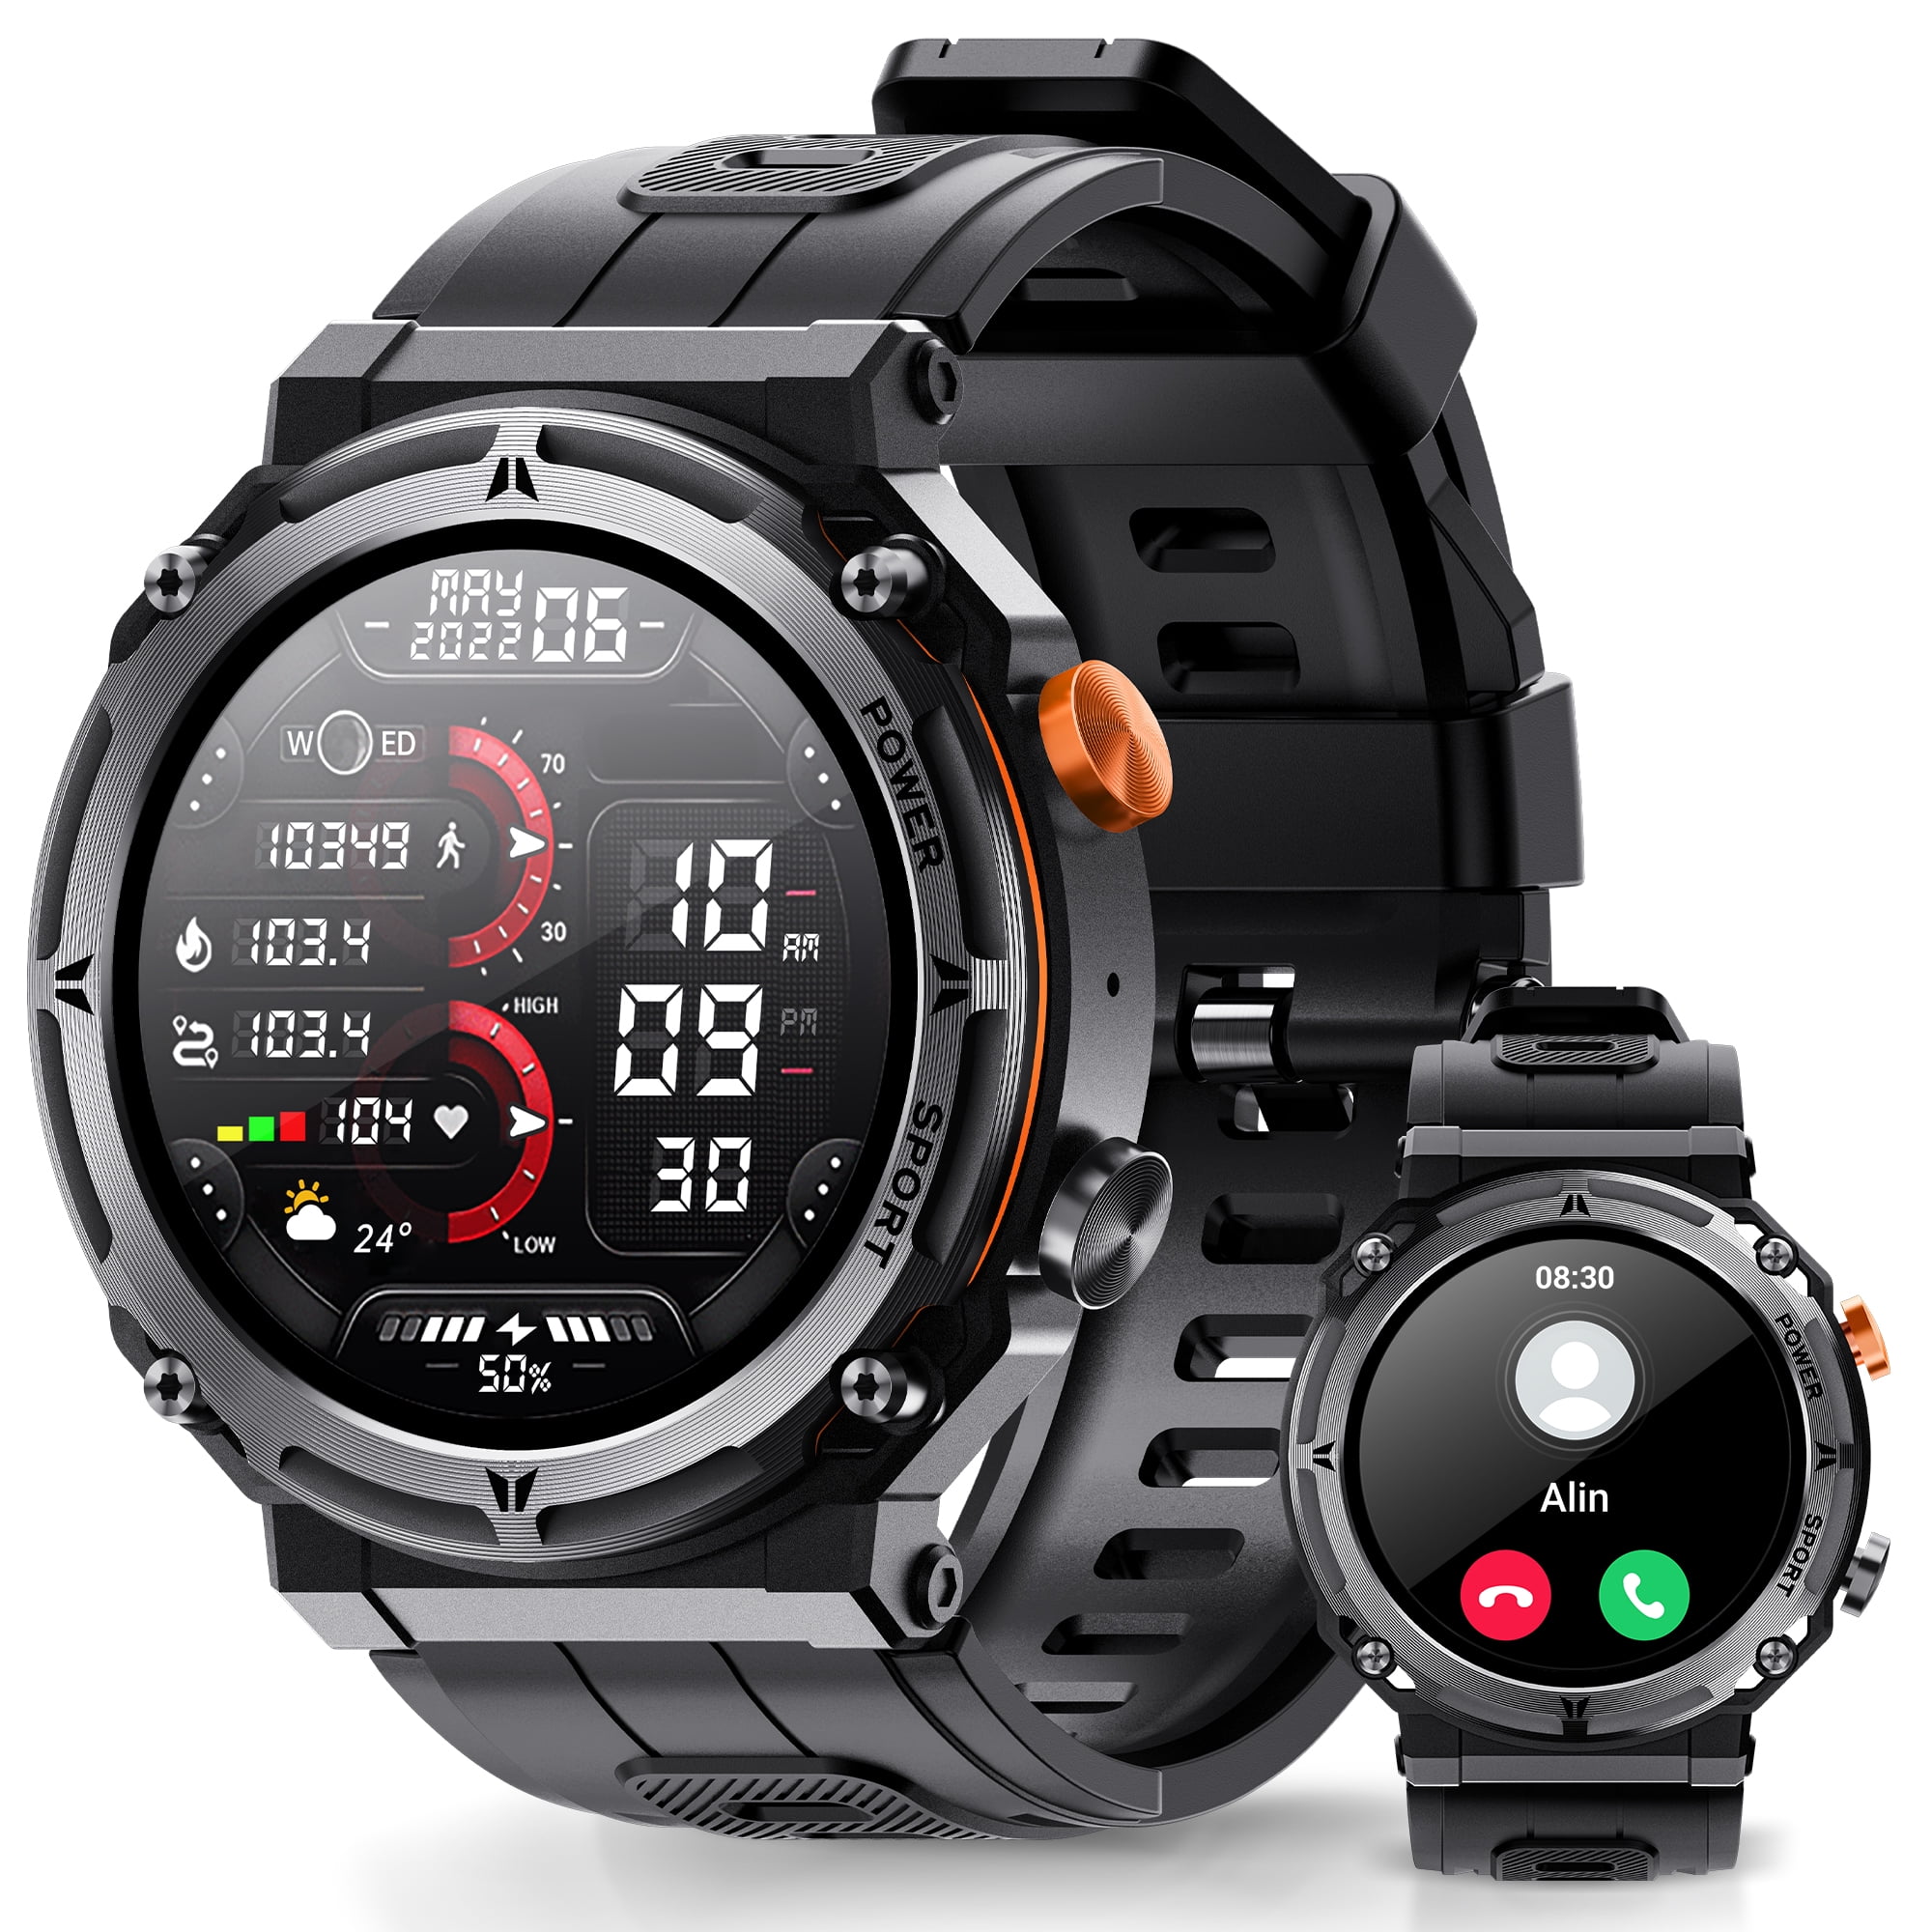 Ifanze Military Smart Watches for Men, C21 Outdoor Smart Watch, Black